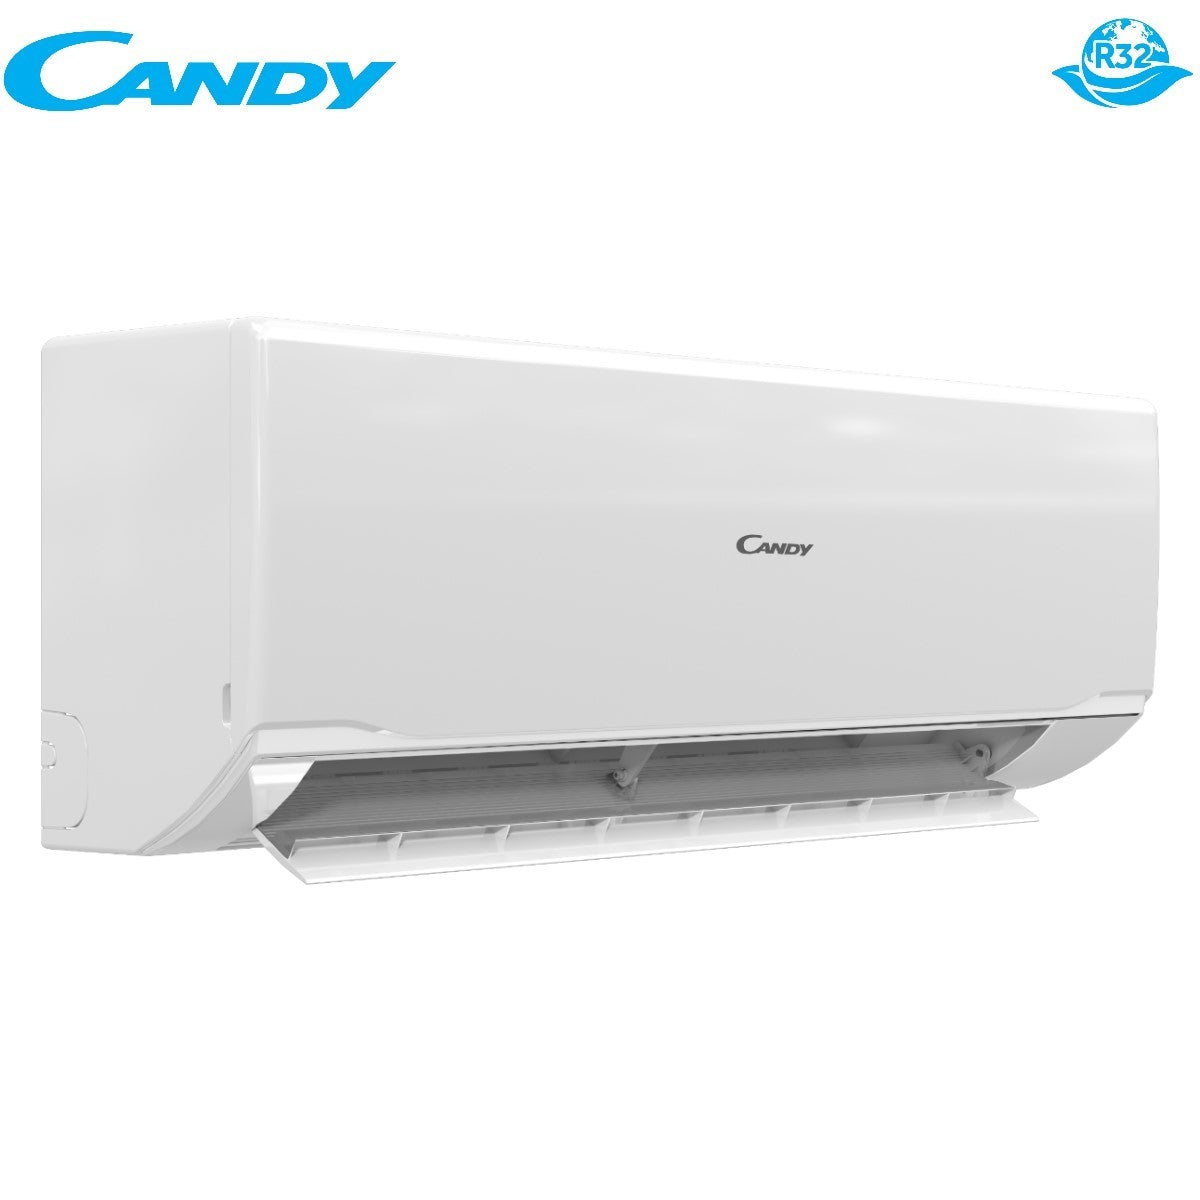 immagine-4-candy-climatizzatore-condizionatore-candy-inverter-serie-pura-12000-btu-cy-12ra-r-32-wi-fi-integrato-classe-aa